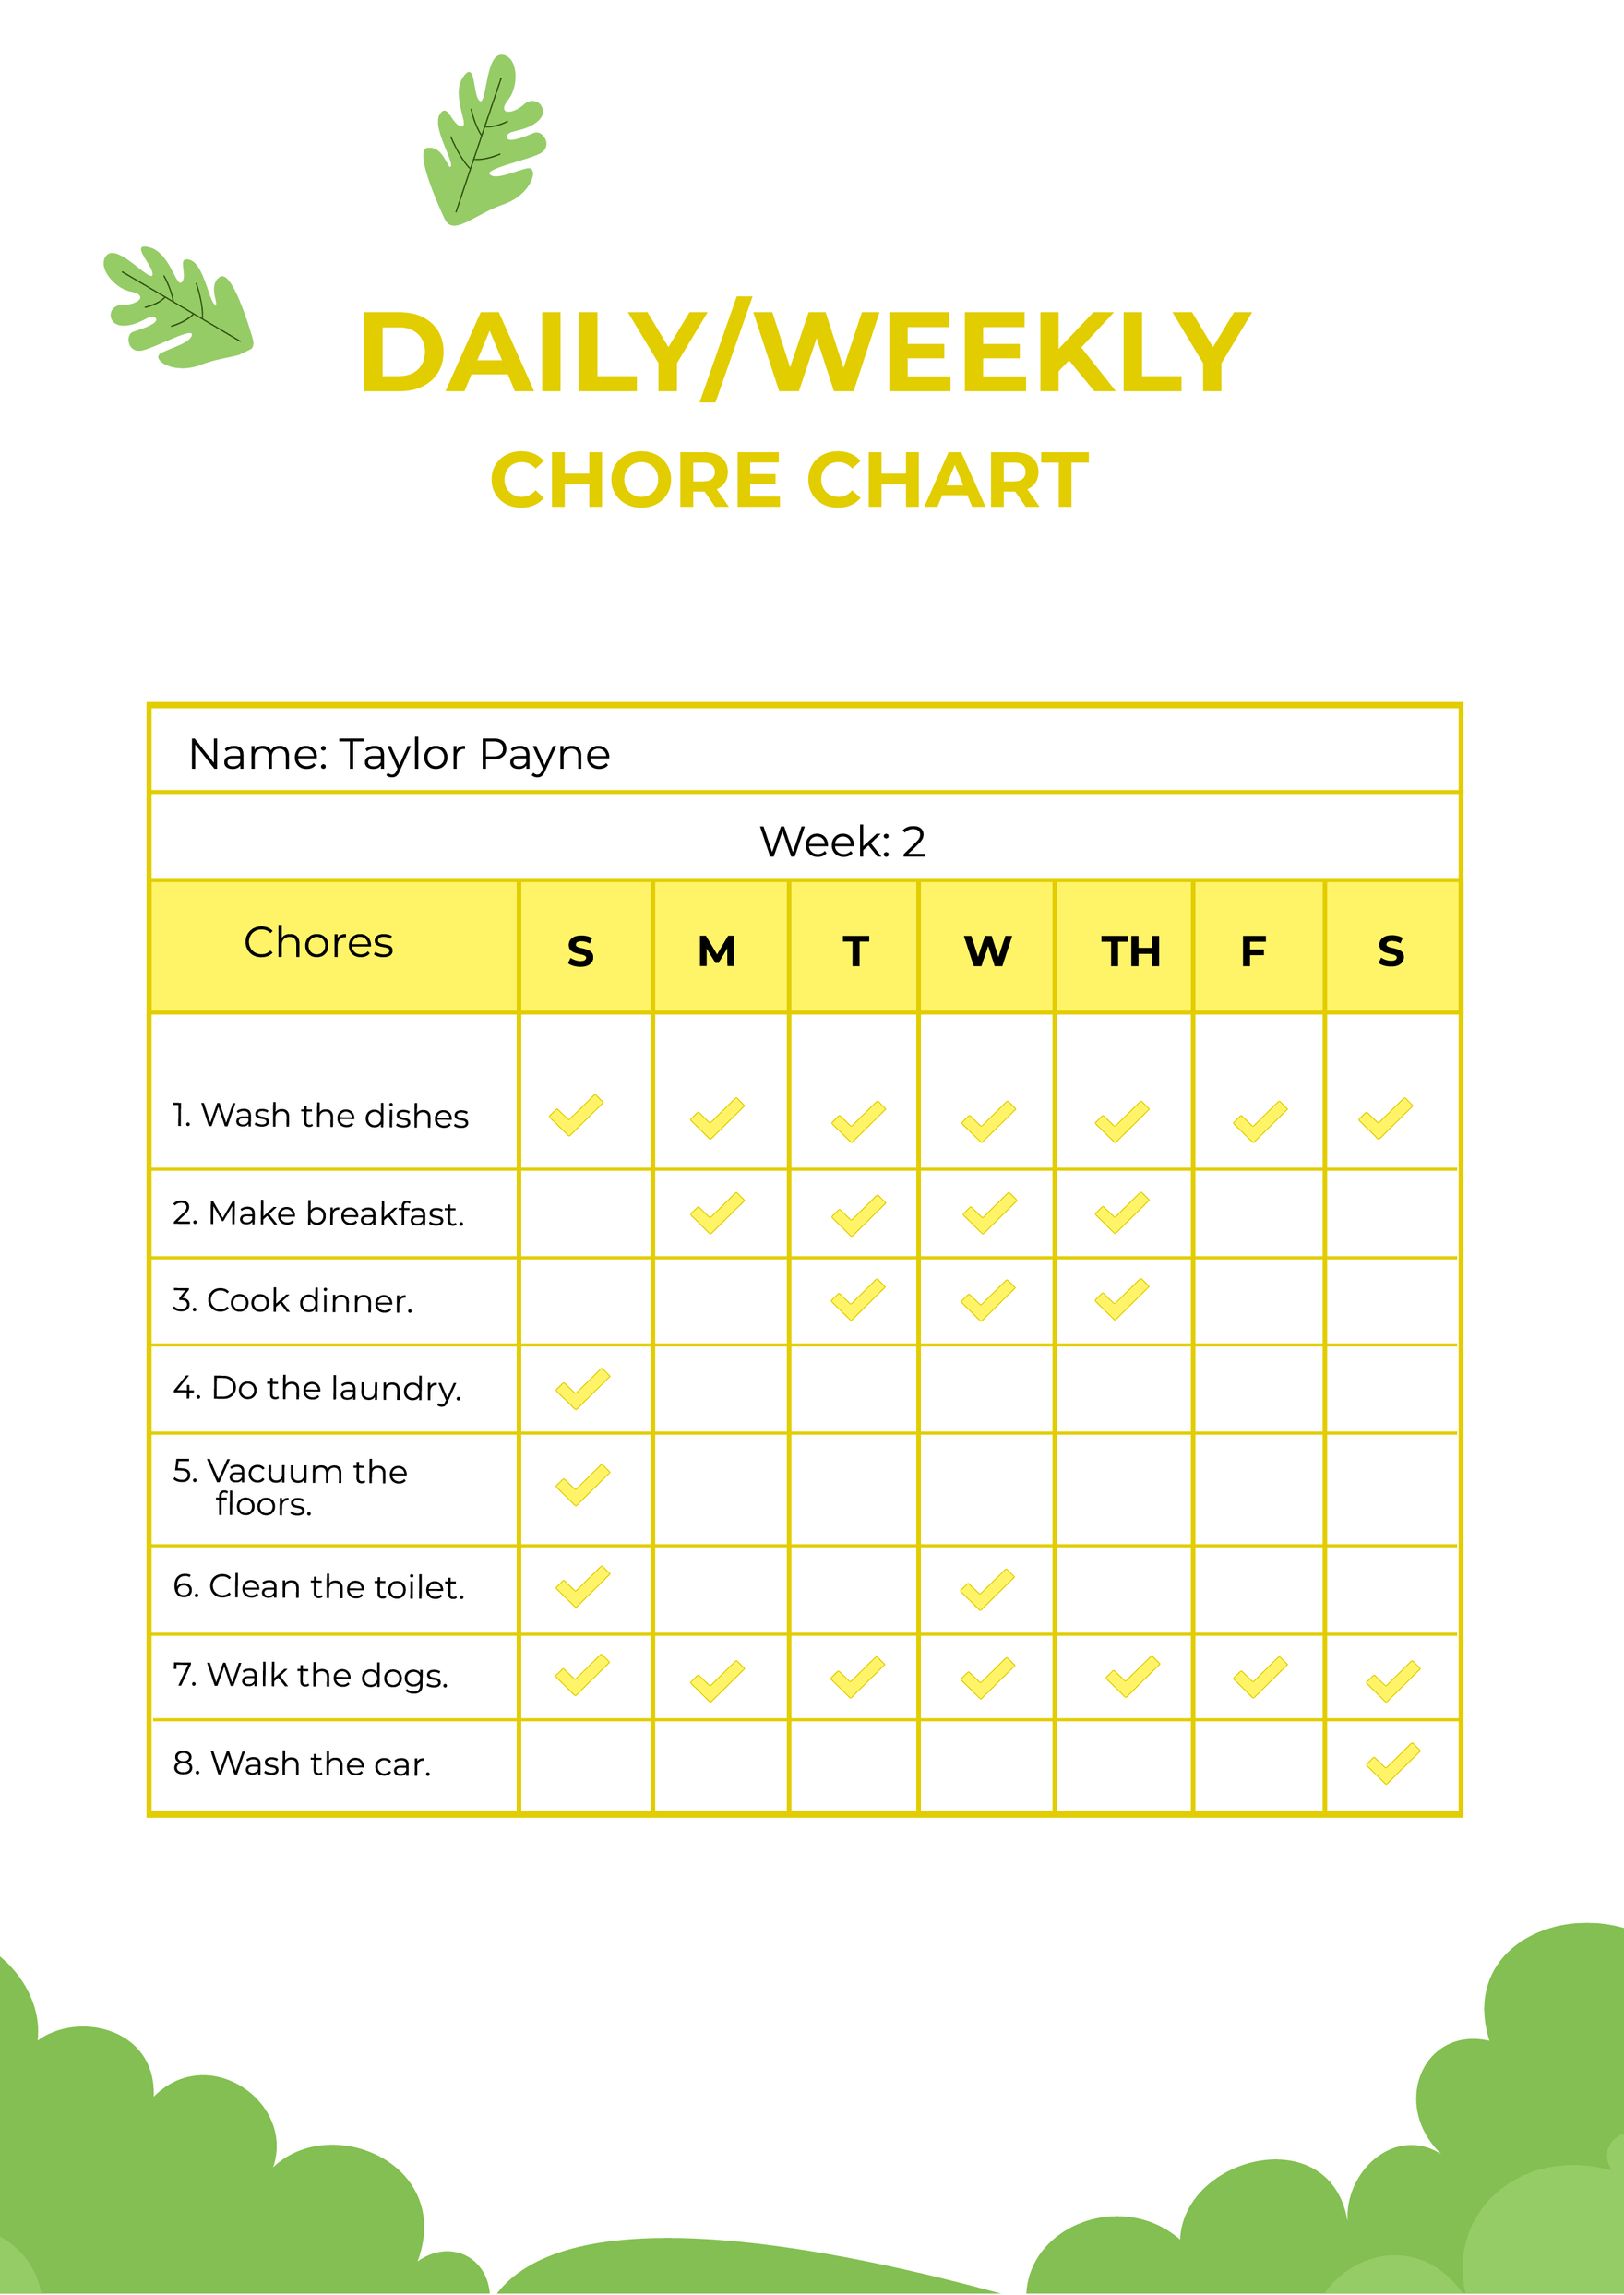 Daily/Weekly Chore Chart